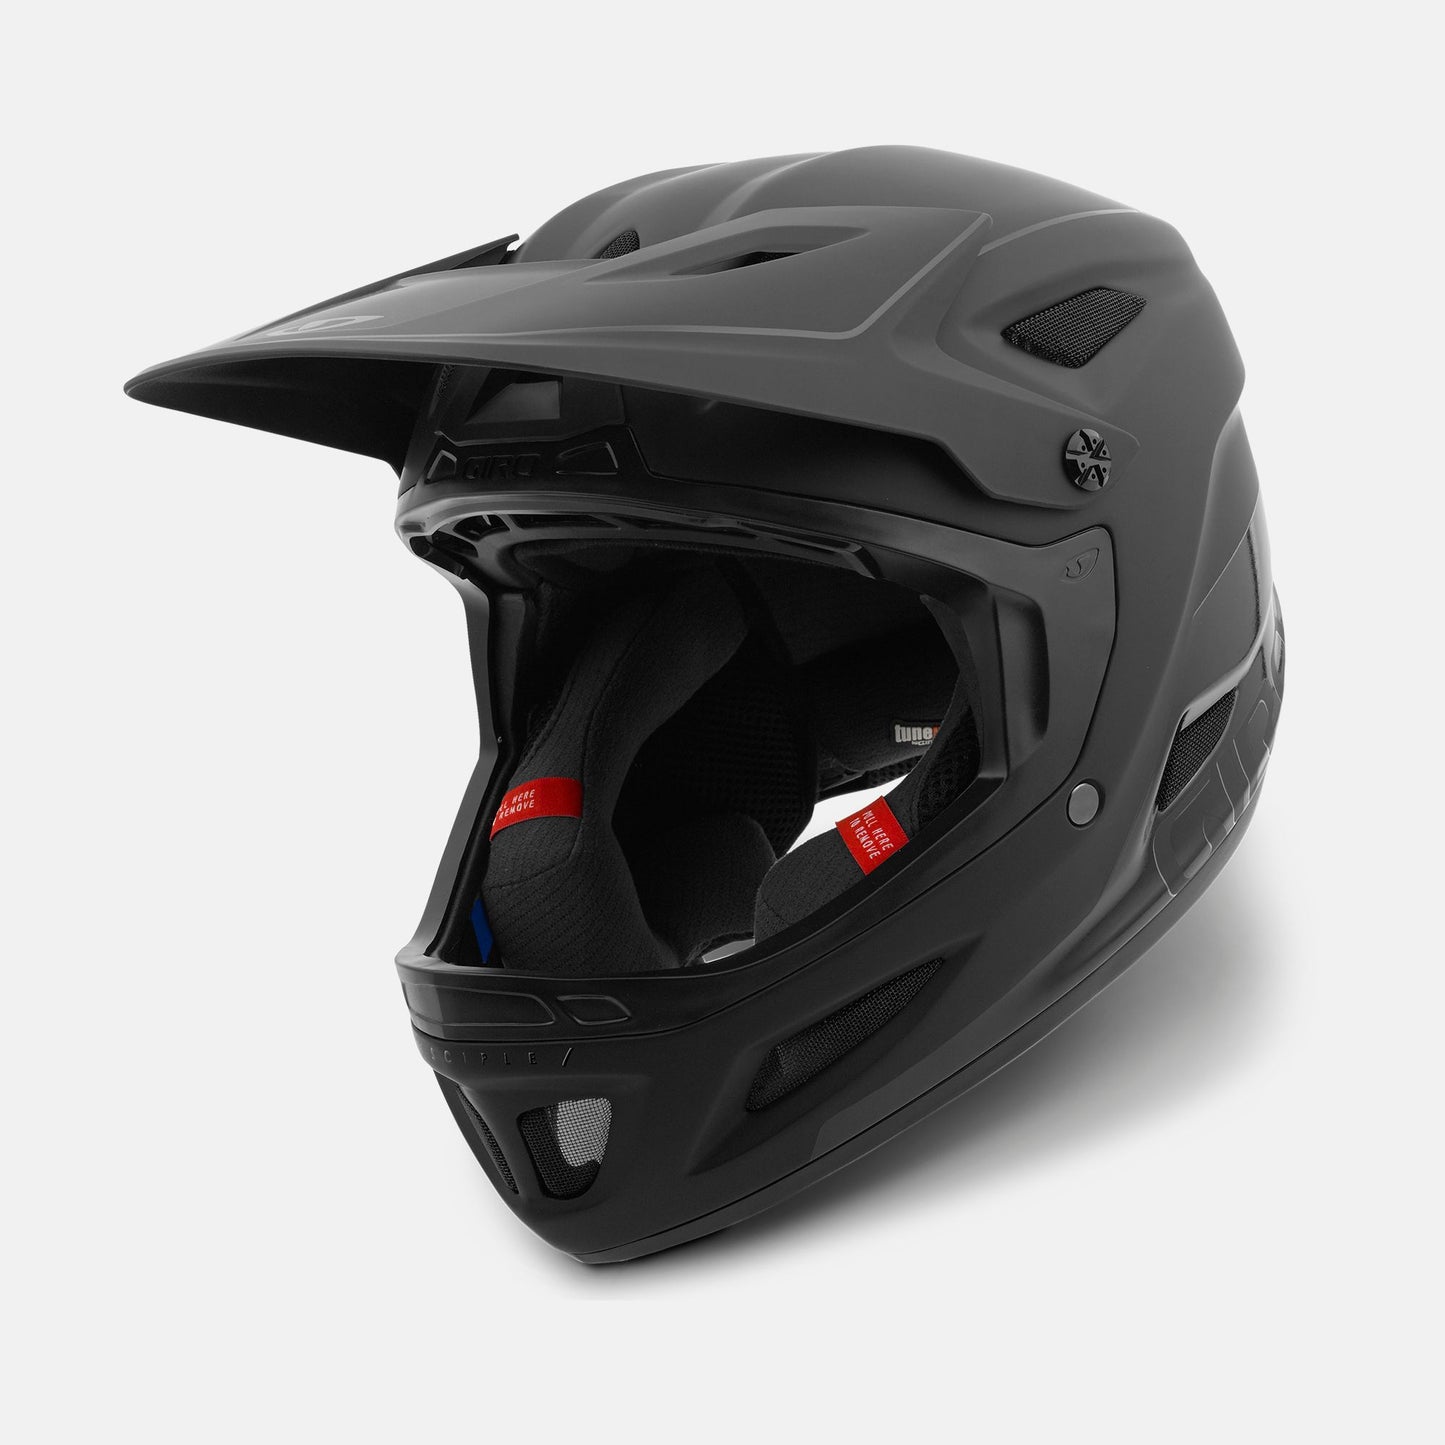 Giro Disciple MIPS Adult Full Face Bike Helmet - Matte Black/Gloss Black - Size M (57–59 cm) - Open Box  - (Without Original Box)